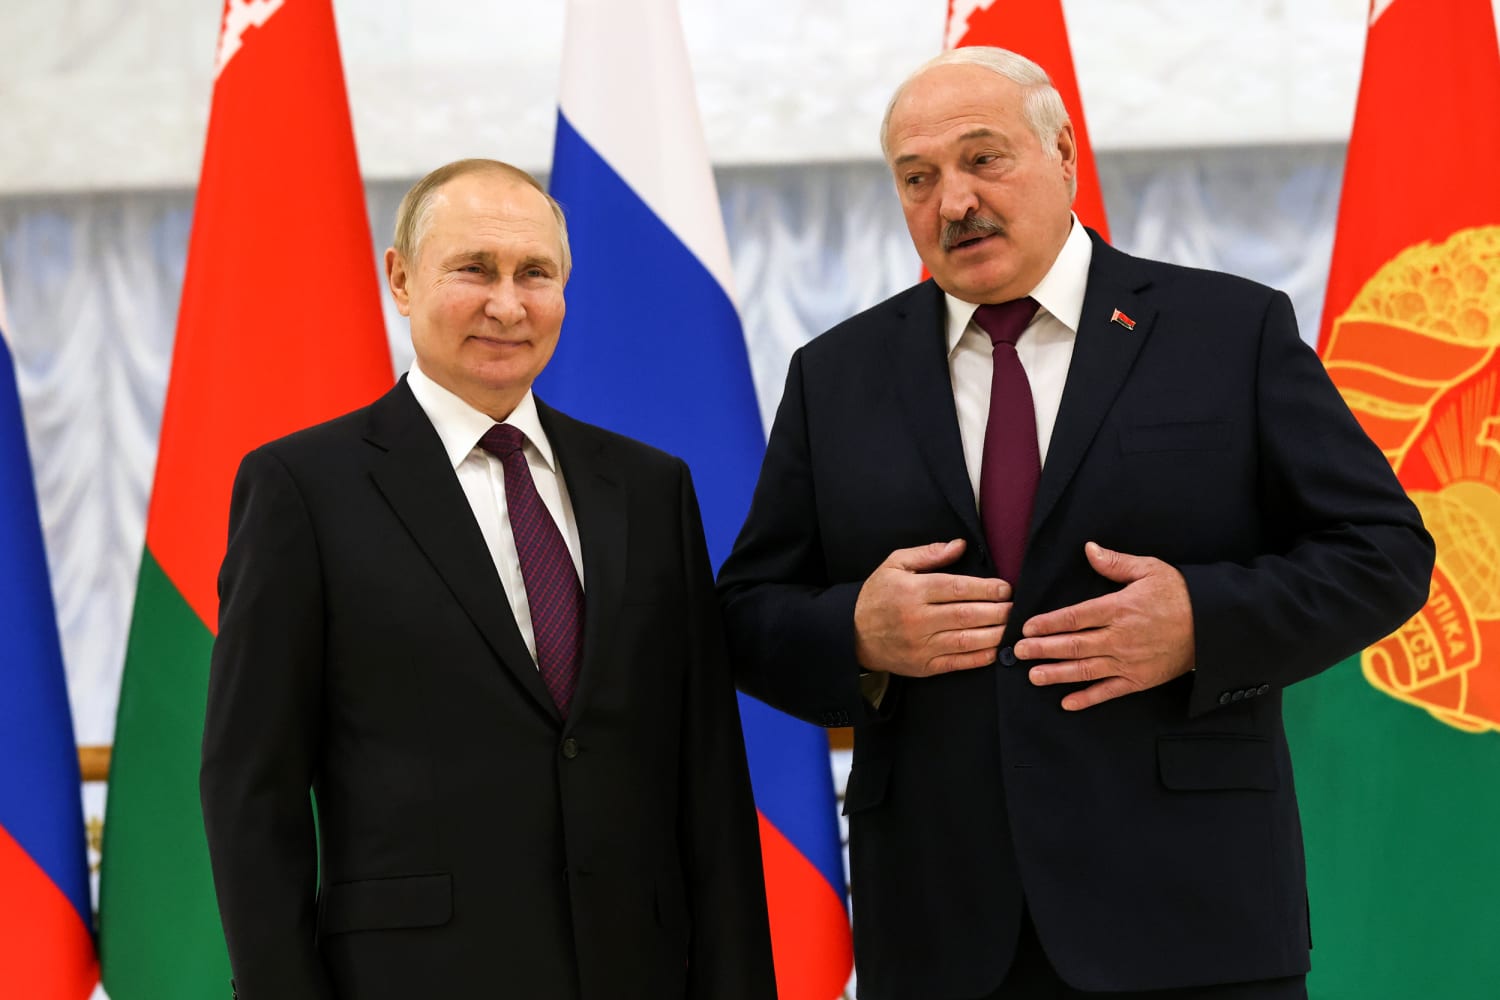 NATO criticizes Putin for 'dangerous' rhetoric over Belarus nuclear weapon deployment